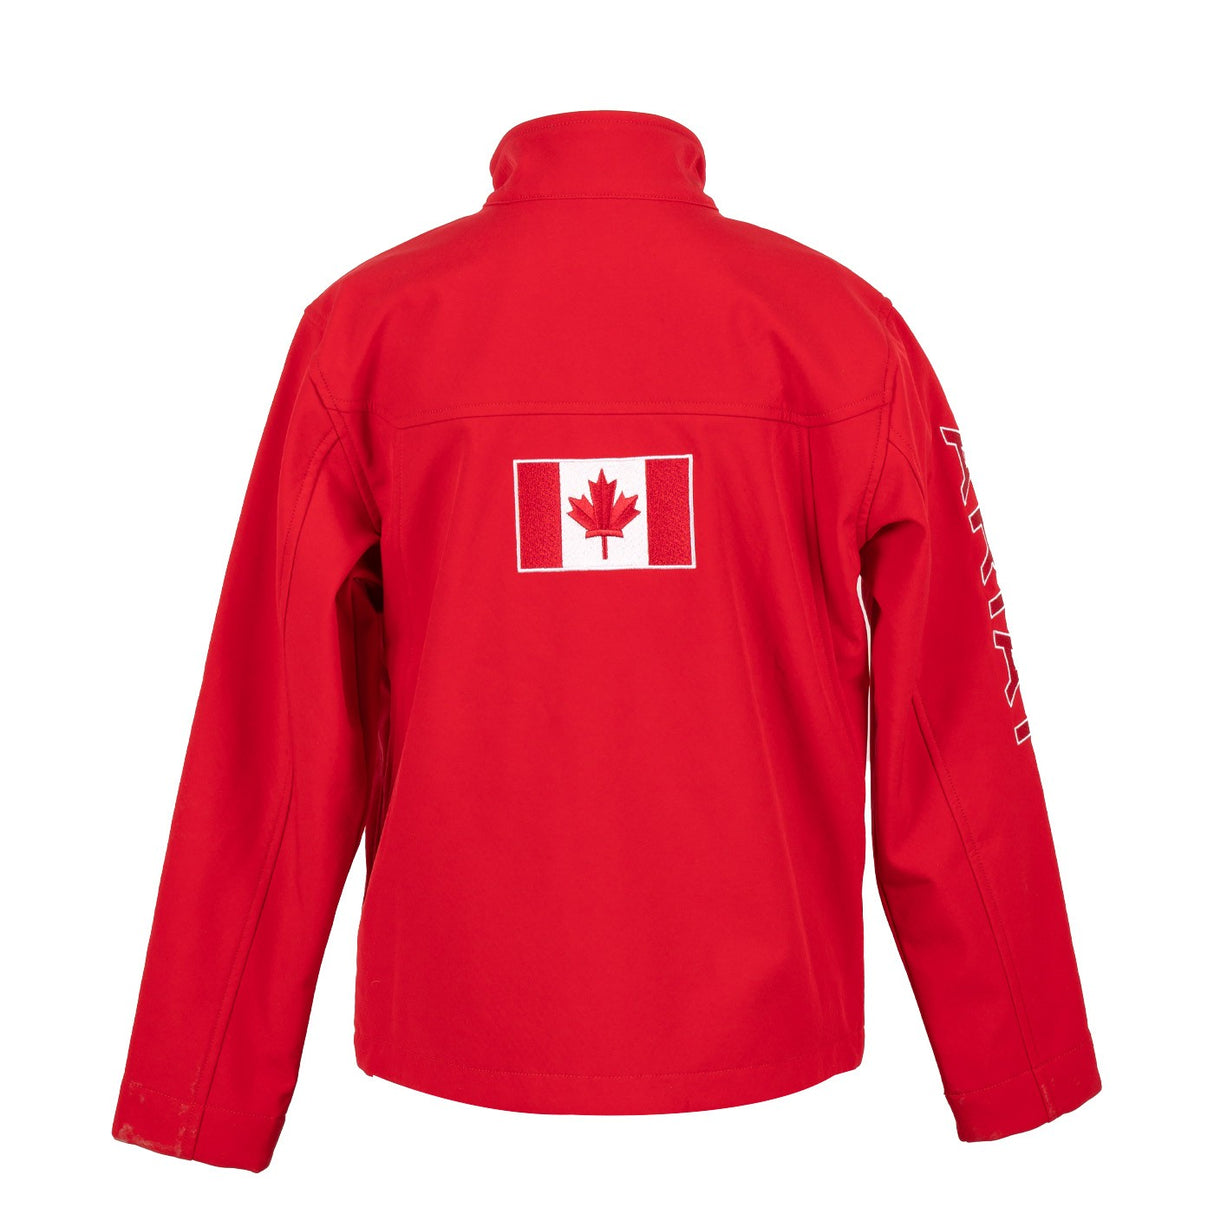 Ariat Team Canada Soft Shell Jacket - Kids'